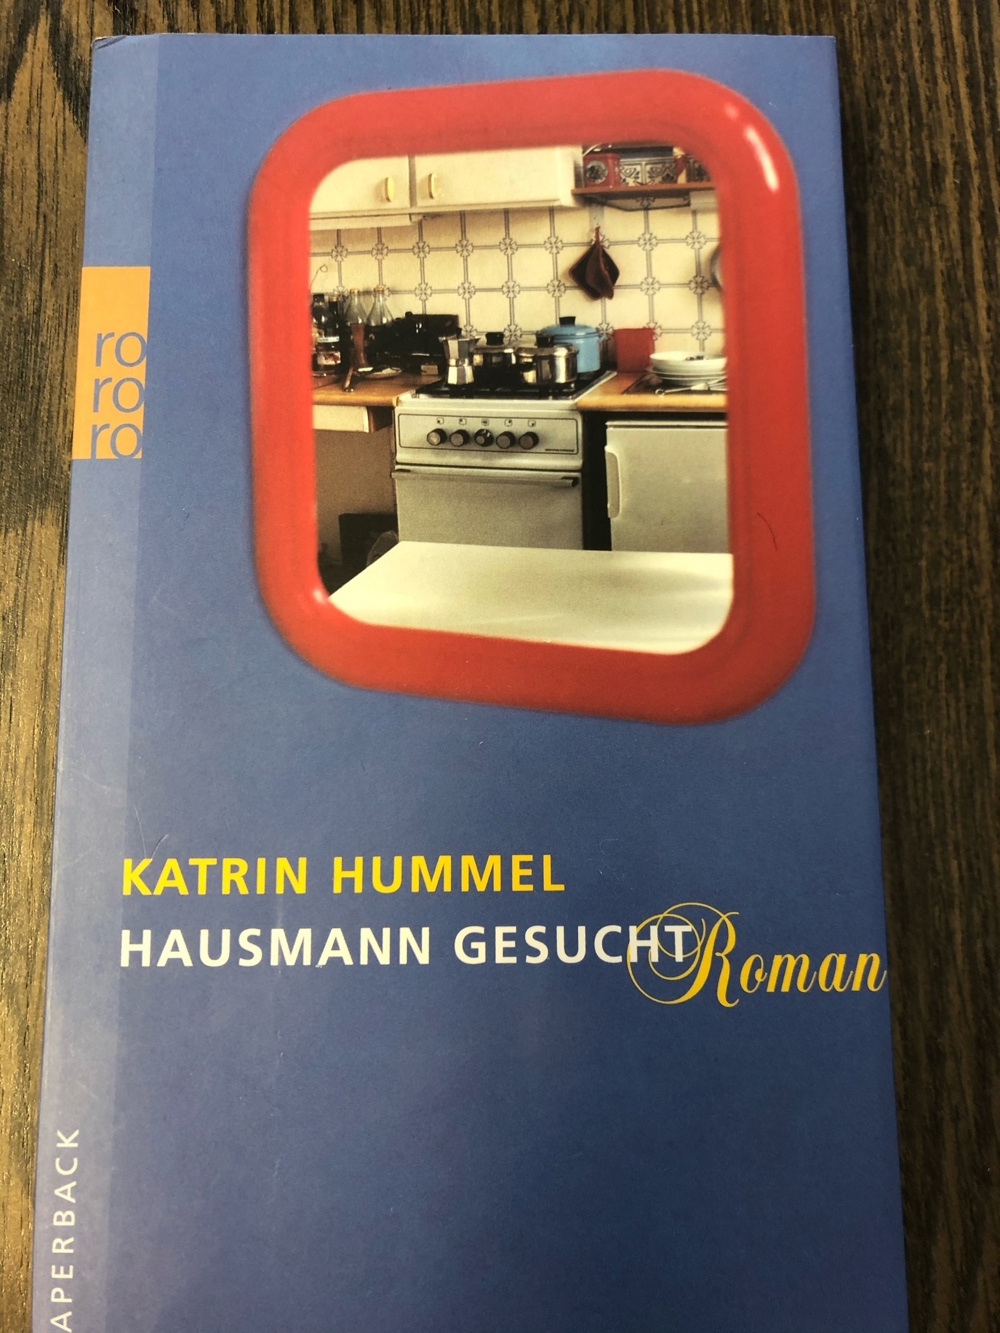 Hausmann gesucht, Katrin Hummel